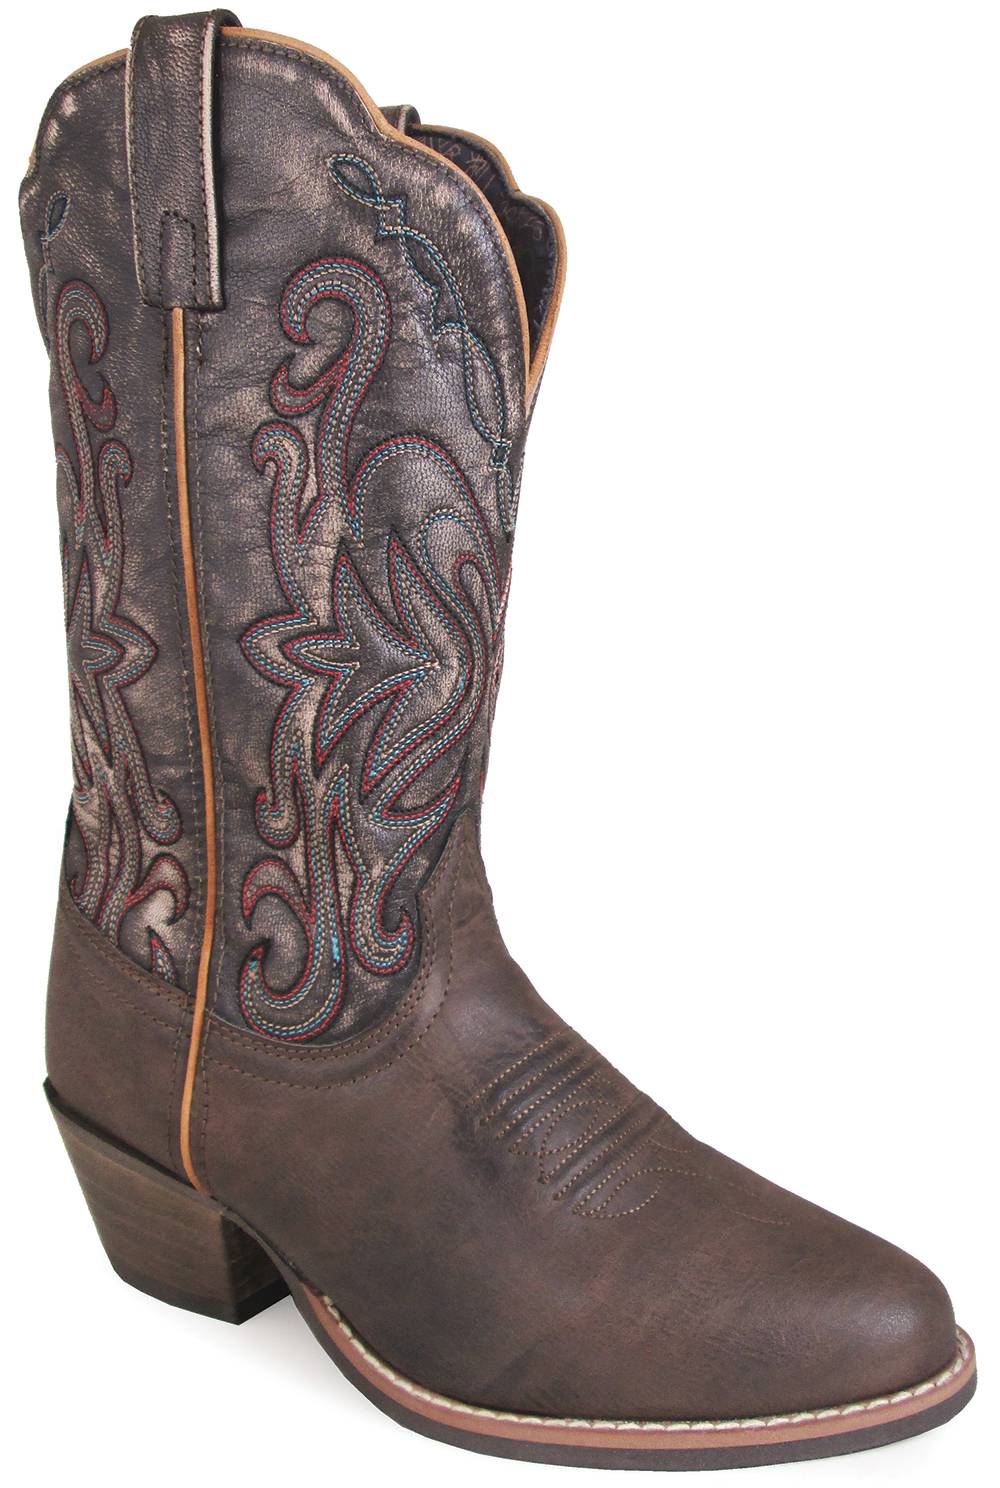 Smoky Mountain Fusion 1 Western Boots - Ladies - Brown/Vintage Black